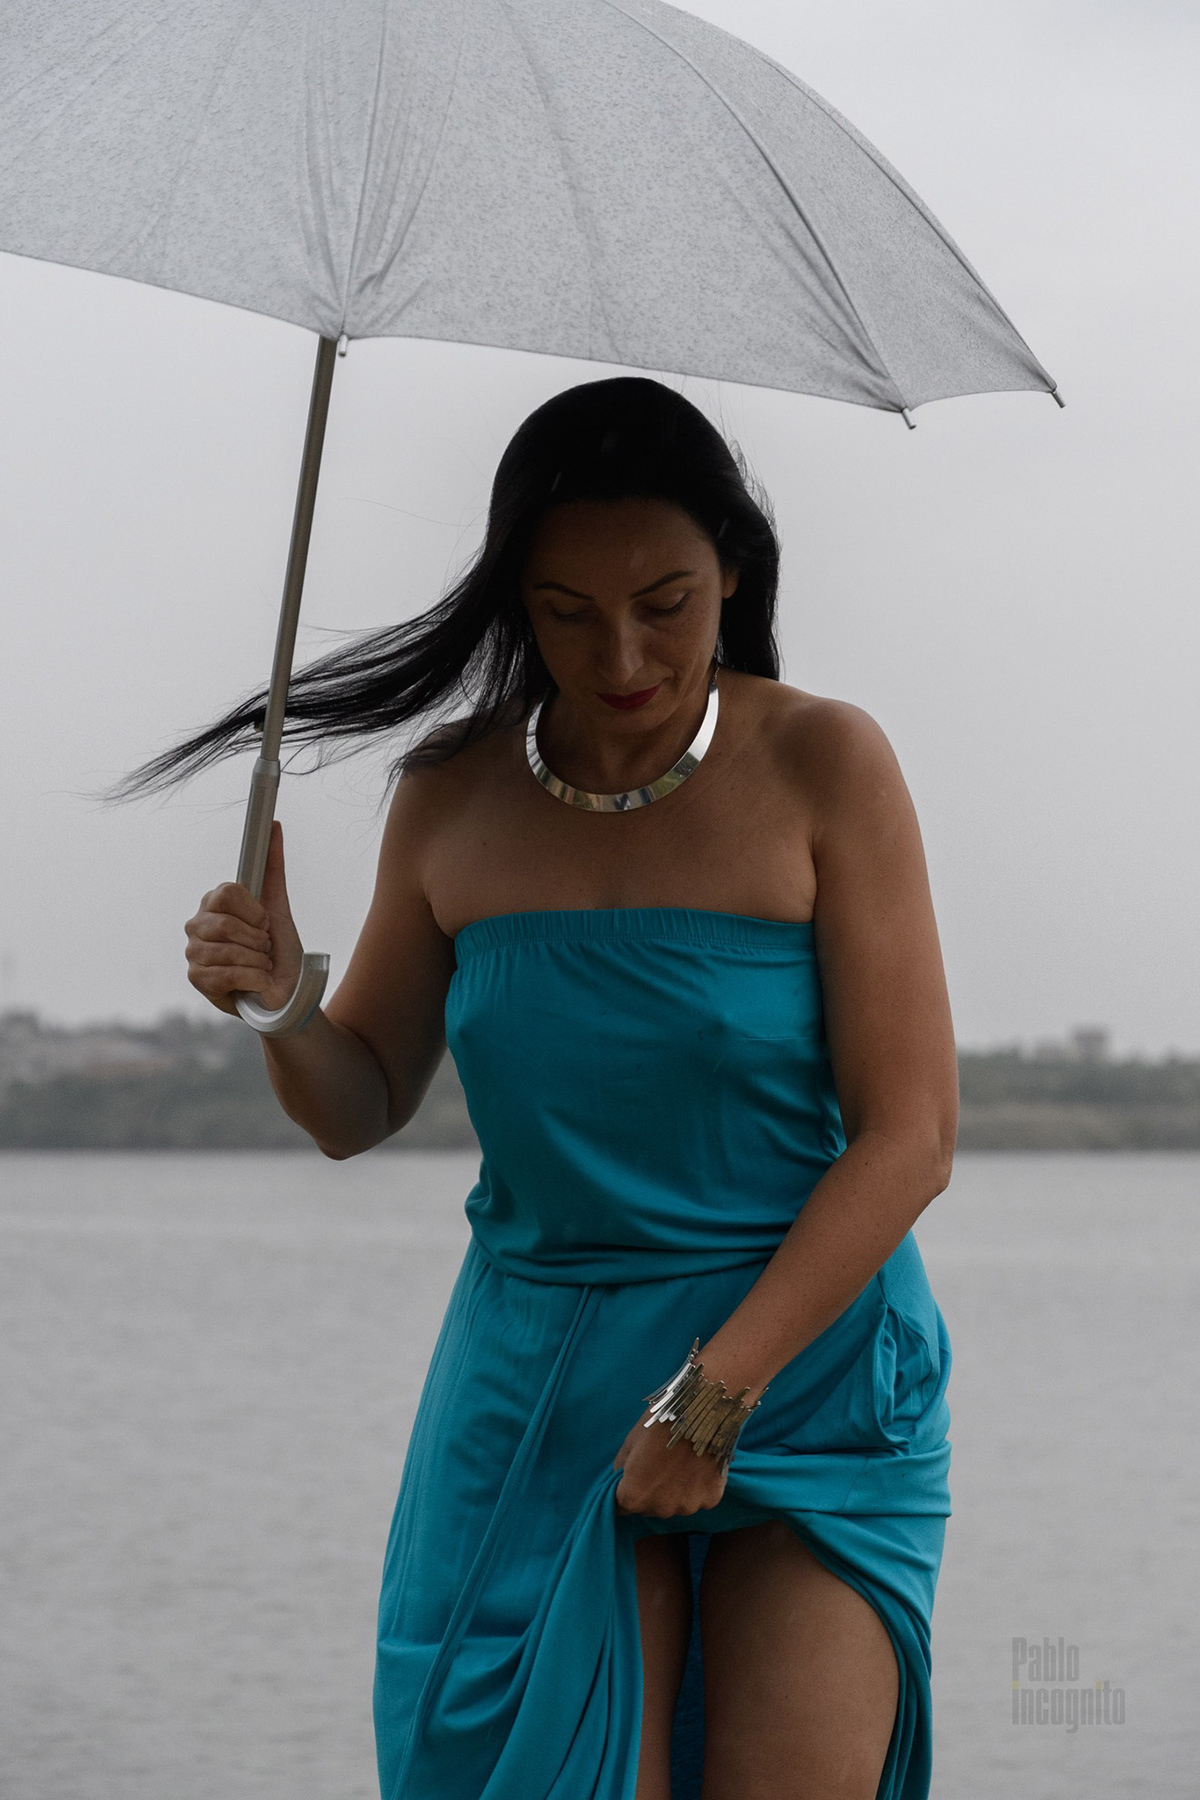 beauty blue glamour model Nude Model portrait rain river Umbrella woman